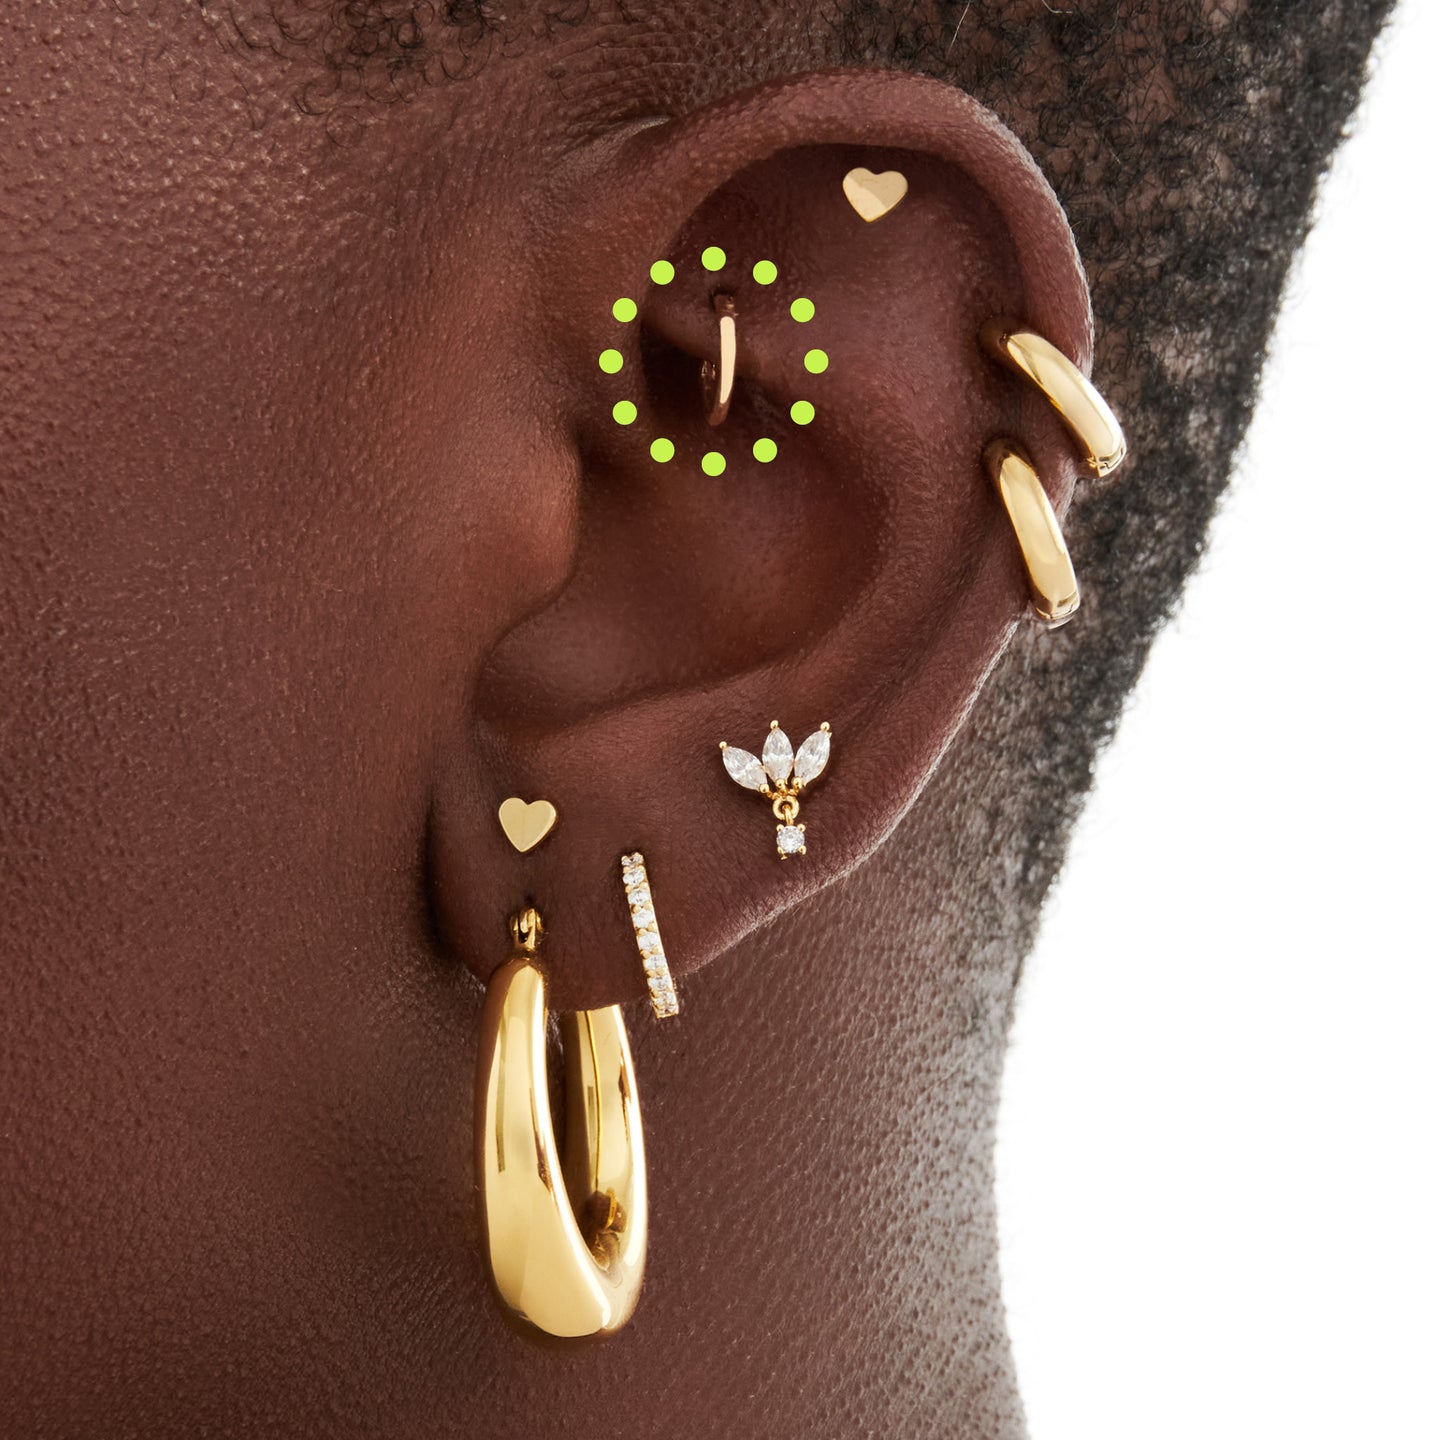 16g Flat Back Earrings Internally Threaded Titanium Cartilage Stud